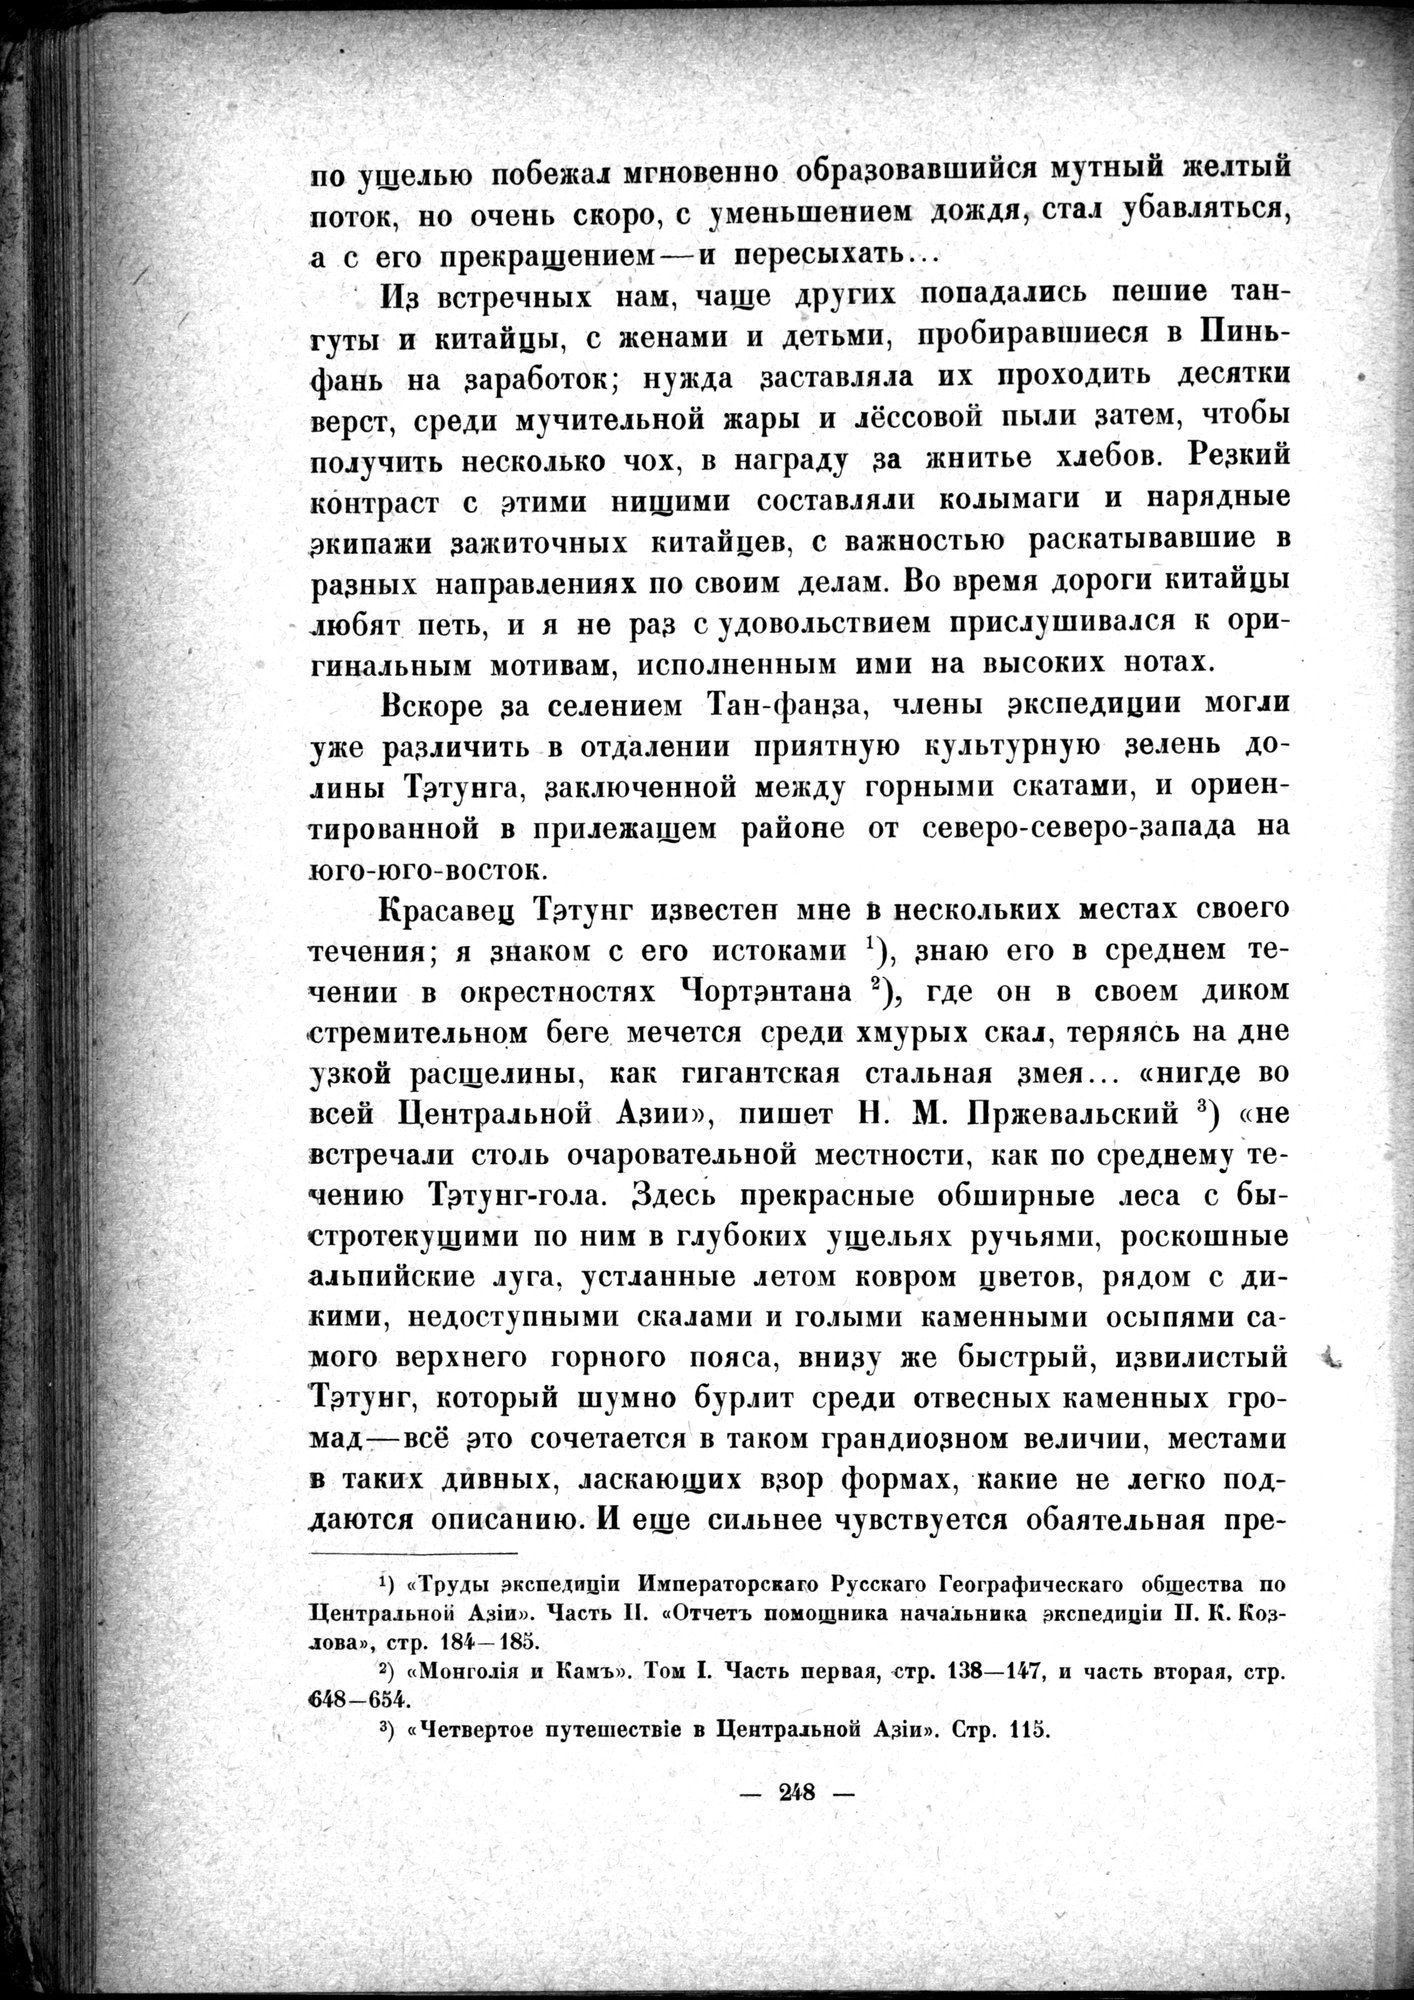 Mongoliya i Amdo i mertby gorod Khara-Khoto : vol.1 / Page 294 (Grayscale High Resolution Image)